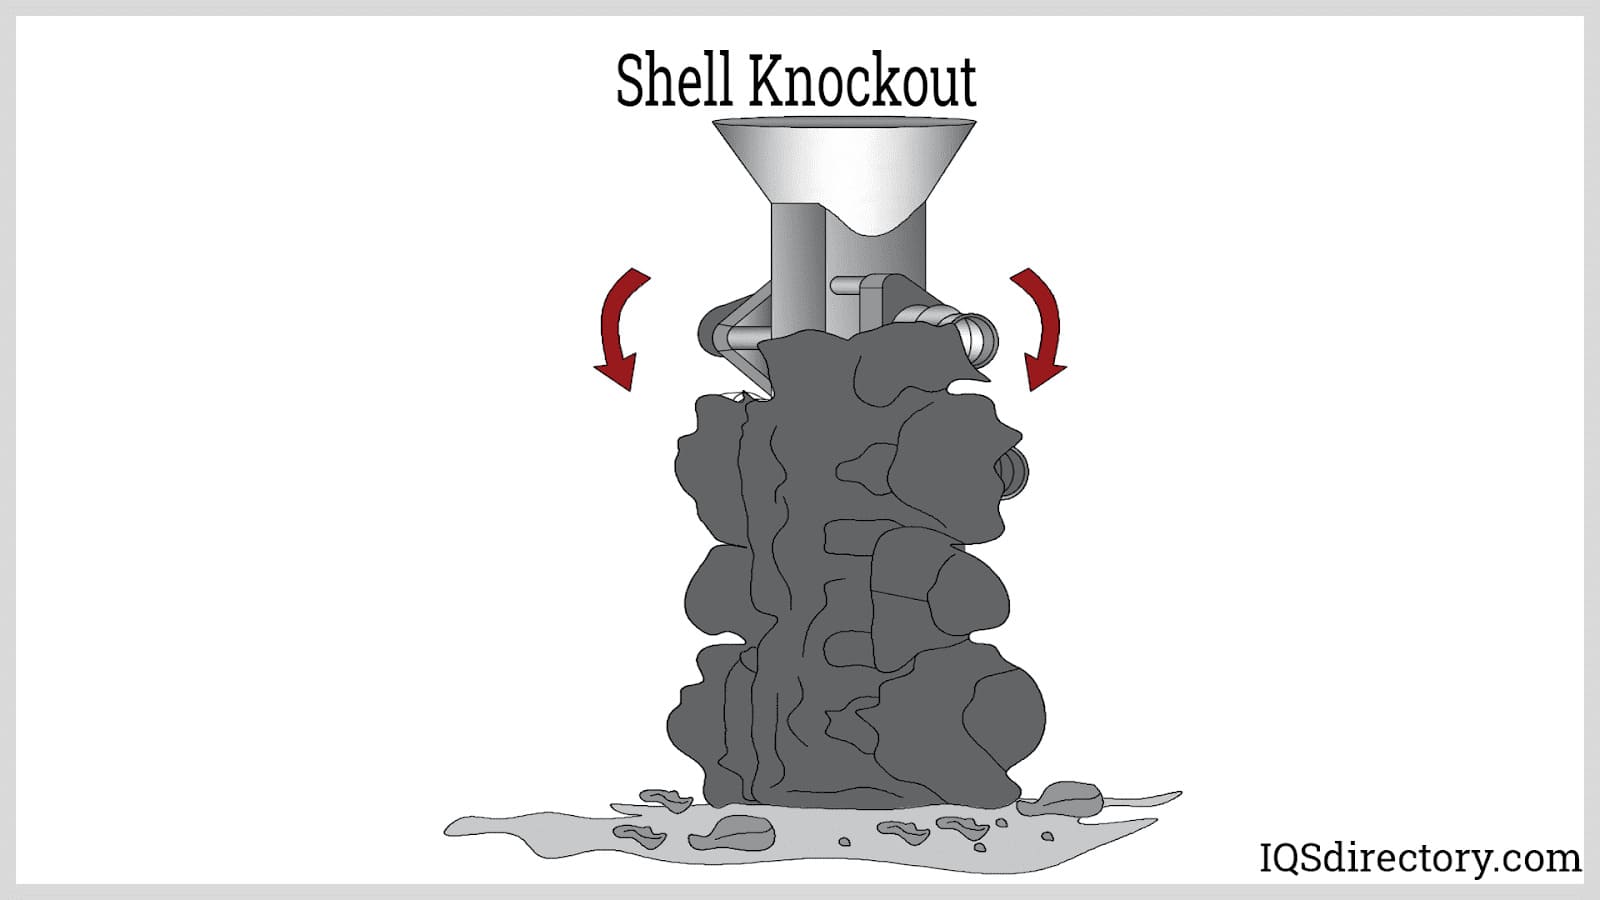 Shell Knockout